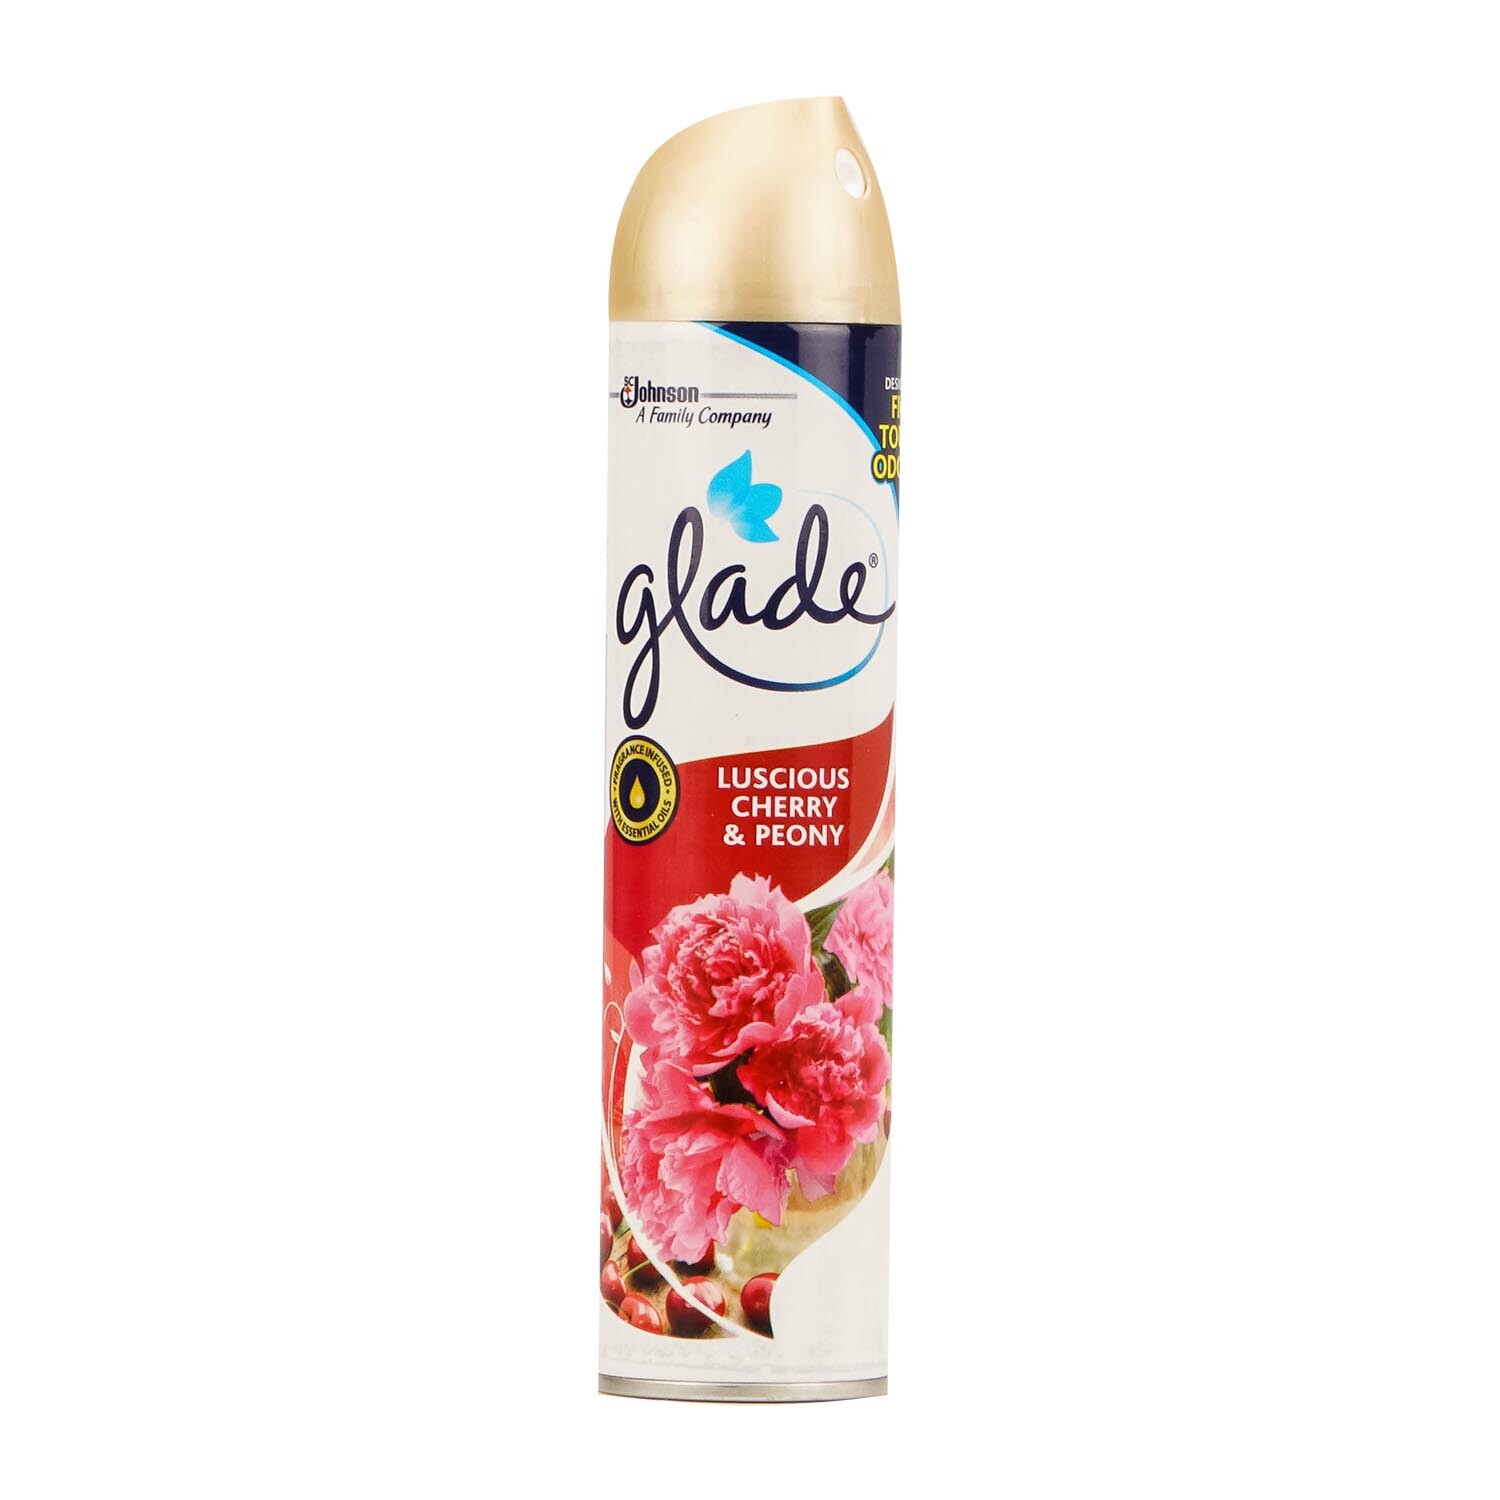 Glade Essence Cherry and Peony Spray Image